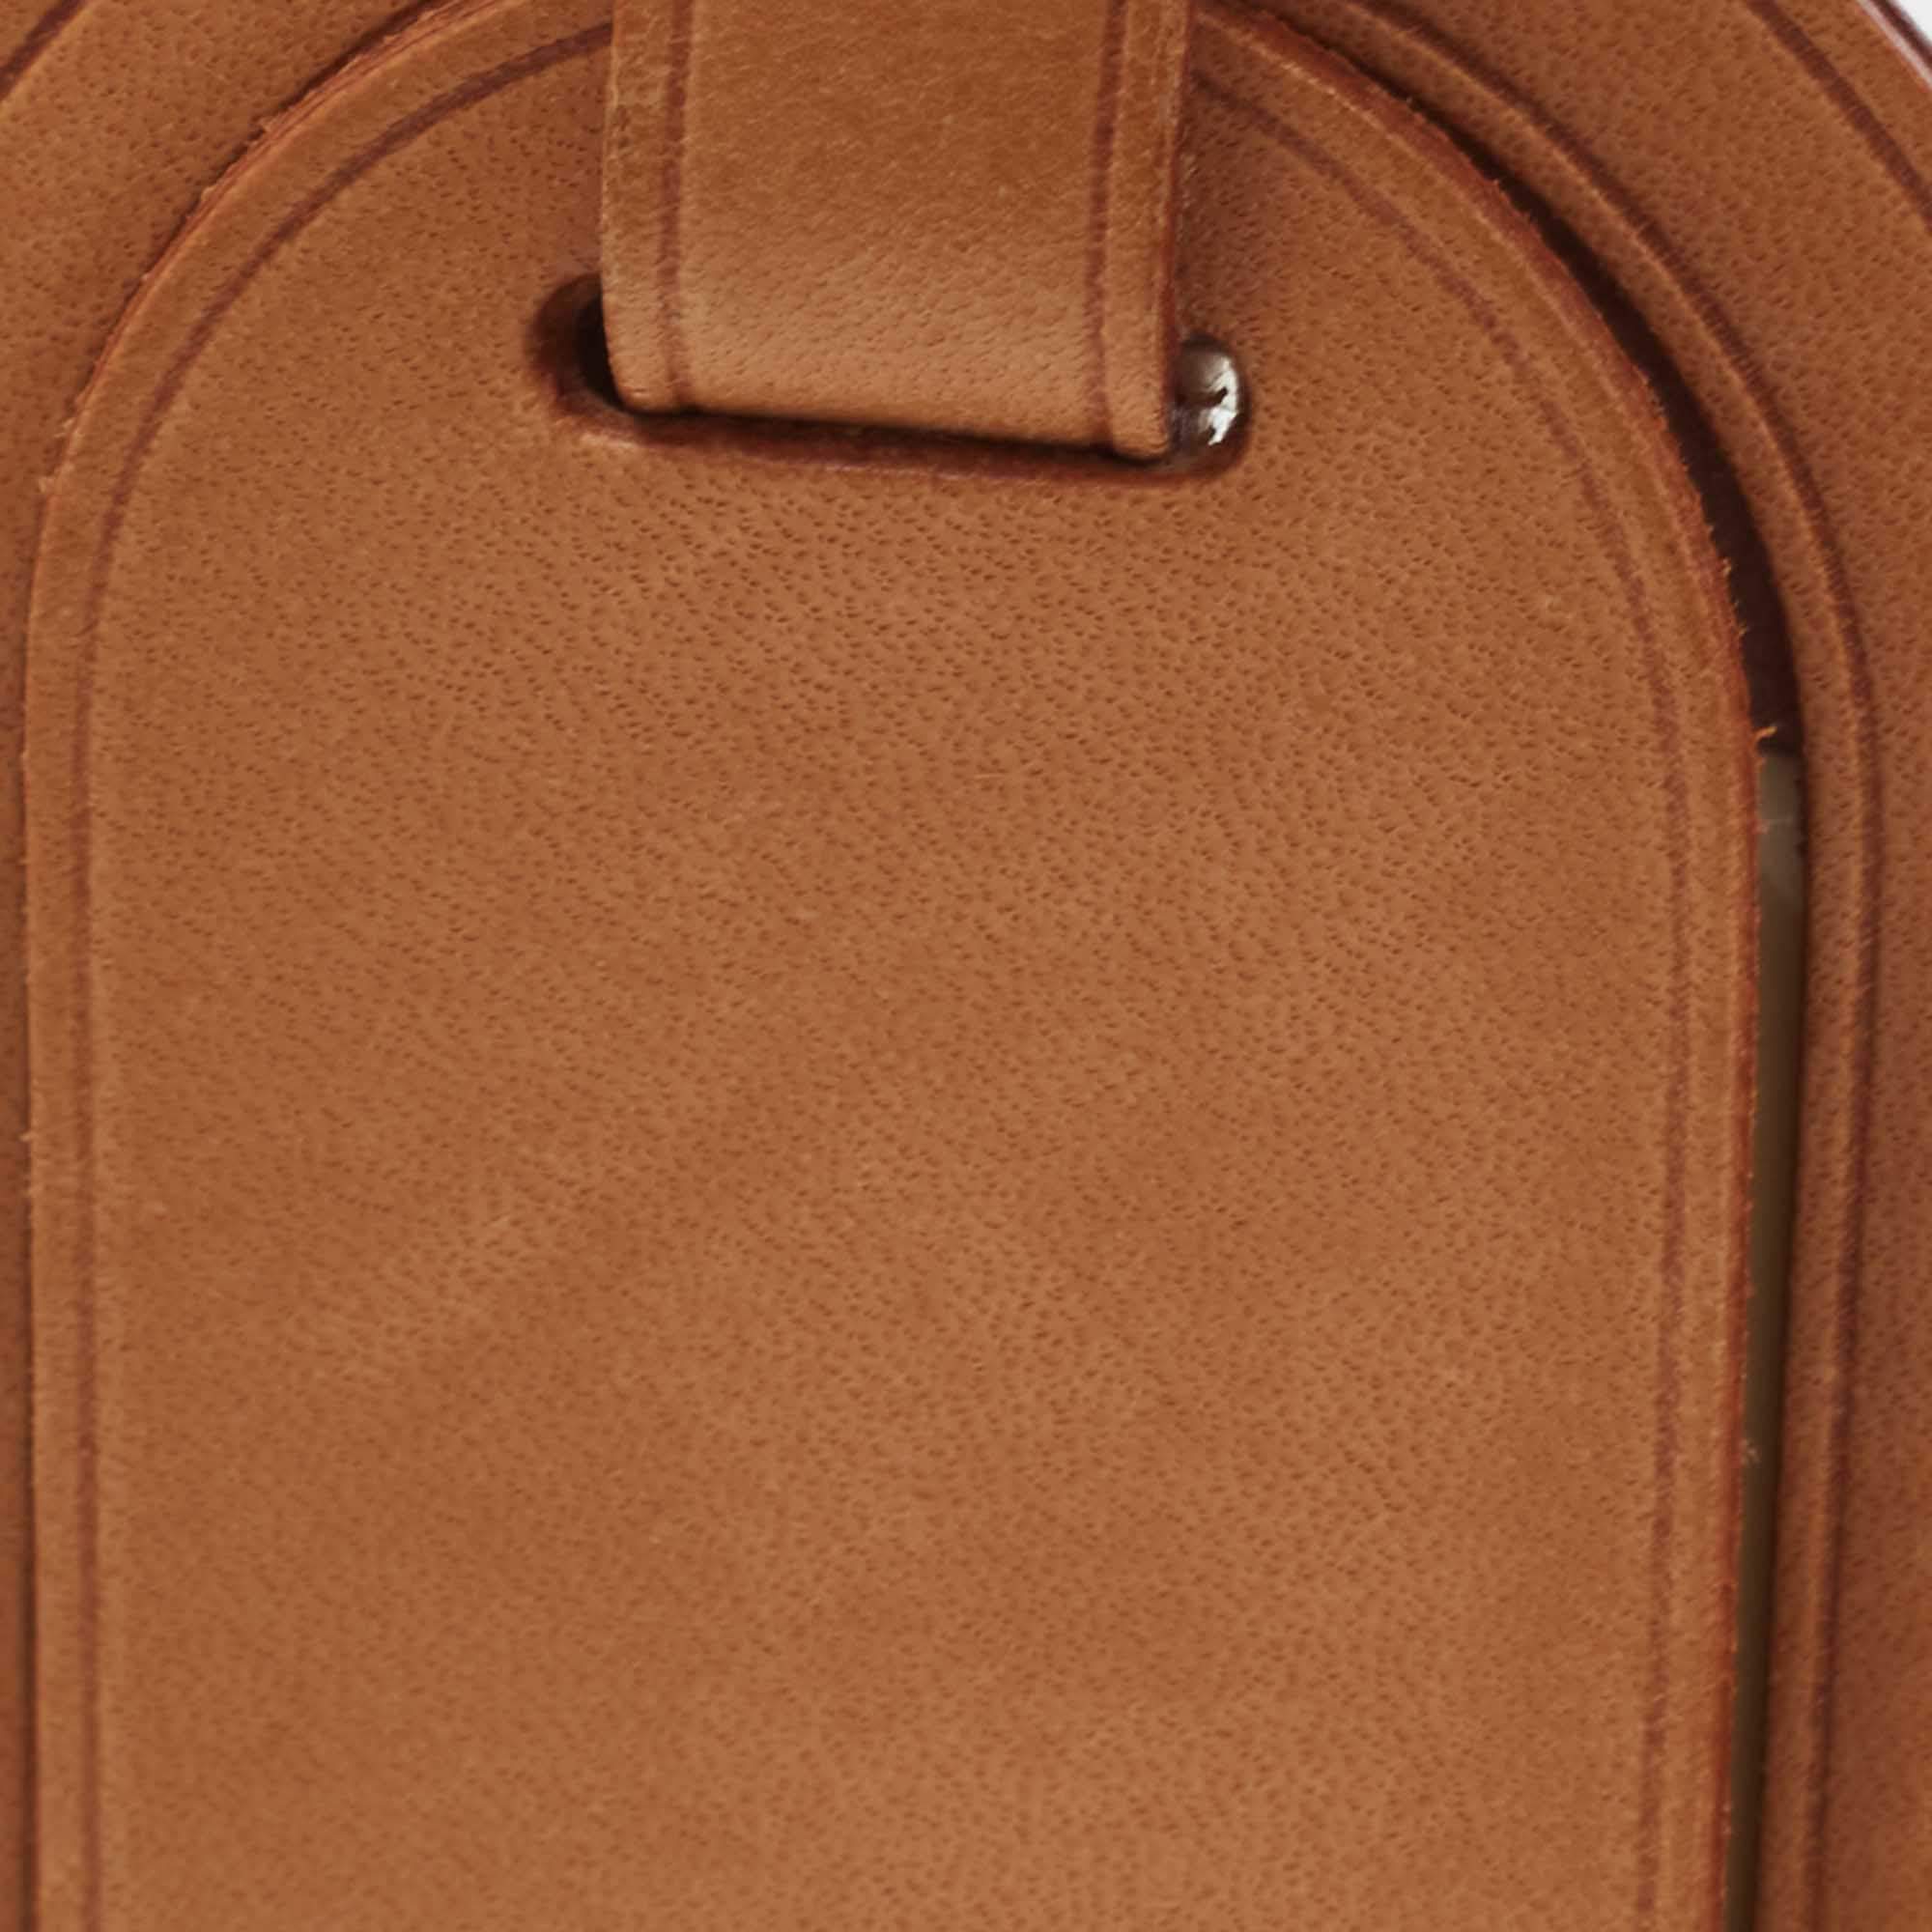 Louis Vuitton Vachetta Leather Luggage Name Tag & Strap Holder